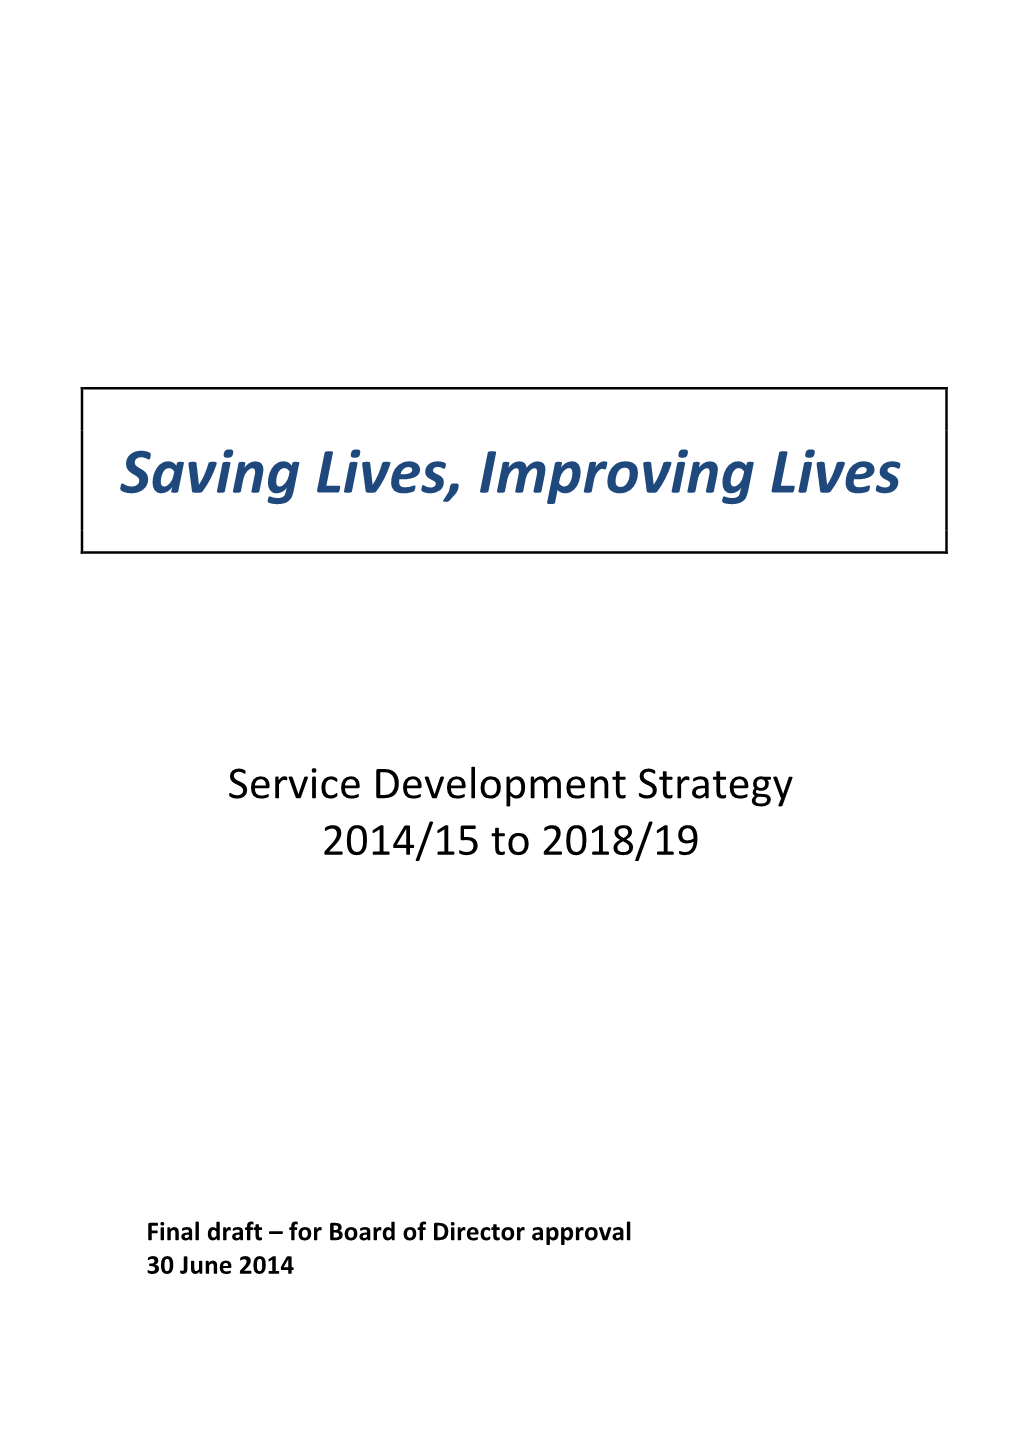 SALFORD Service Development Strategy to 2018/19